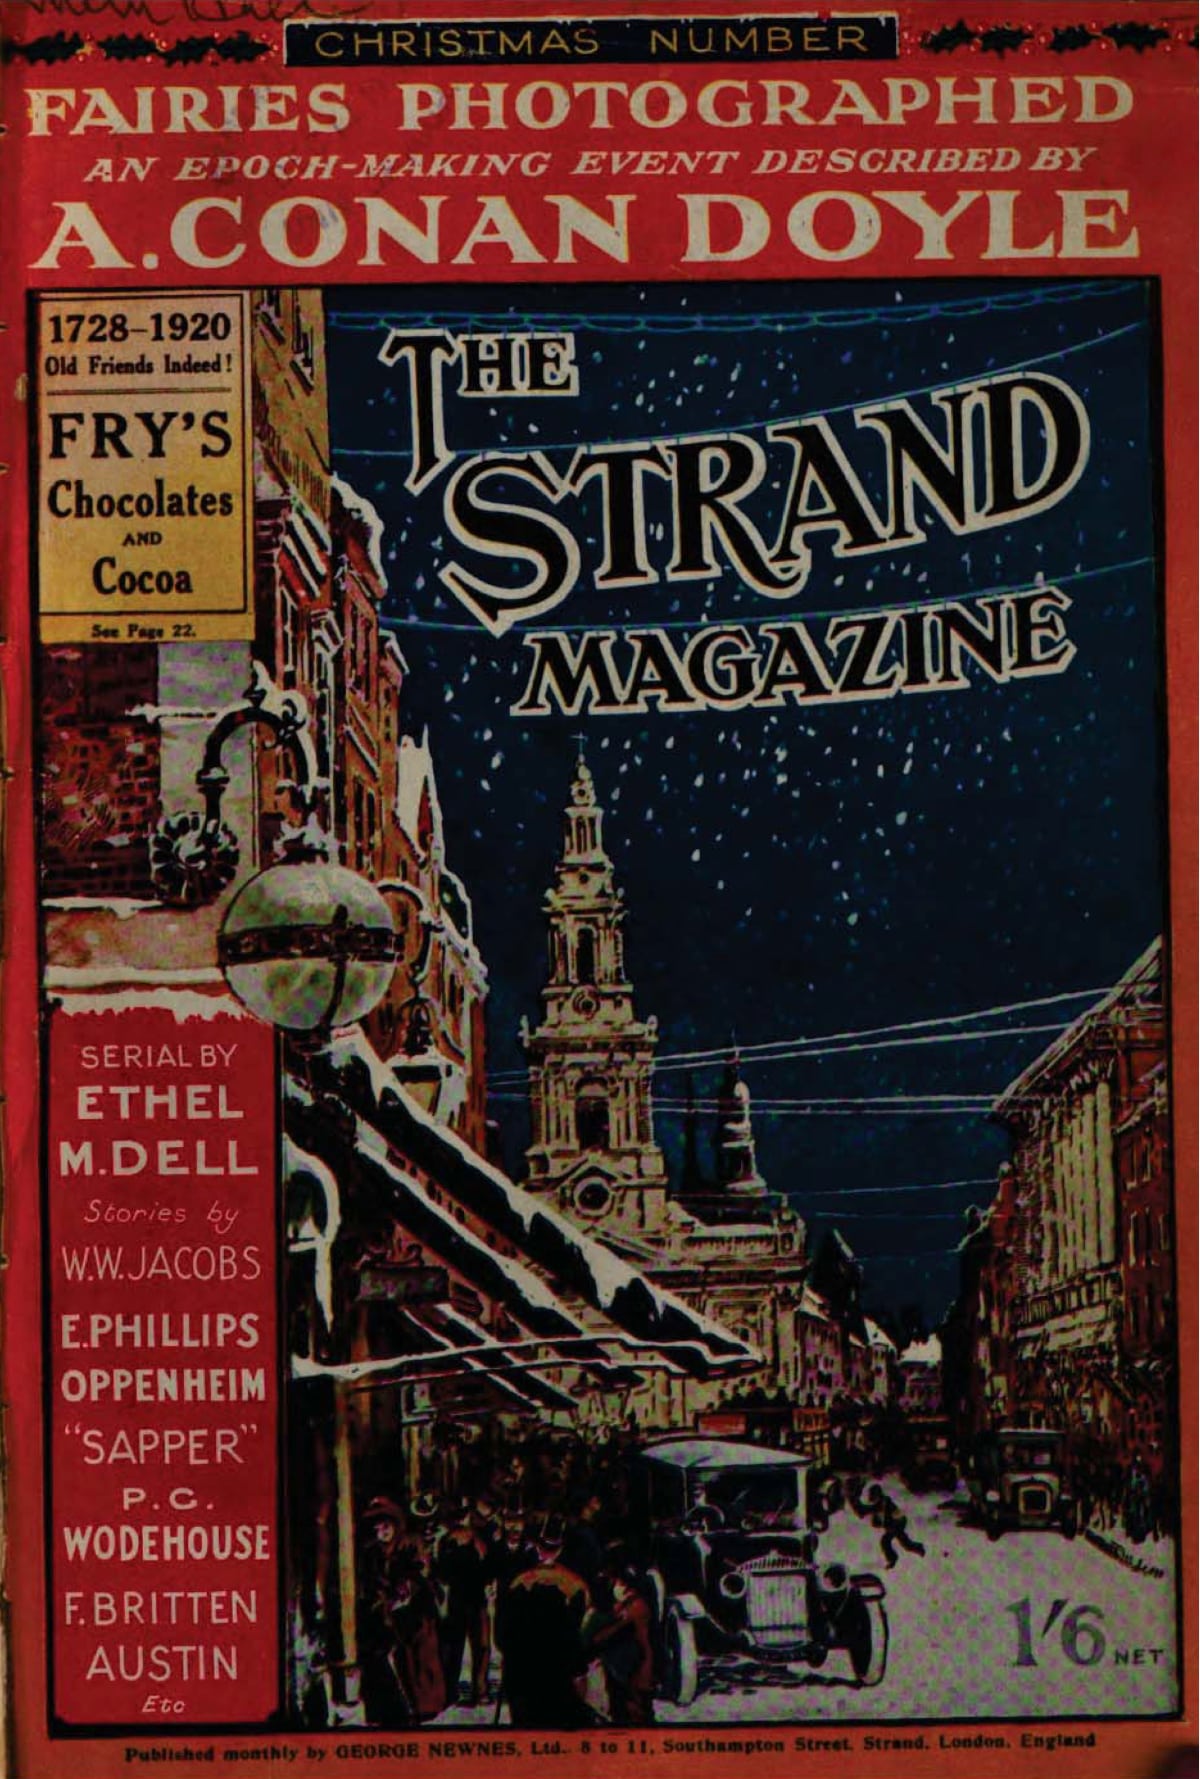 Portada del número de Navidad de 1920 de 'The Strand Magazine'.